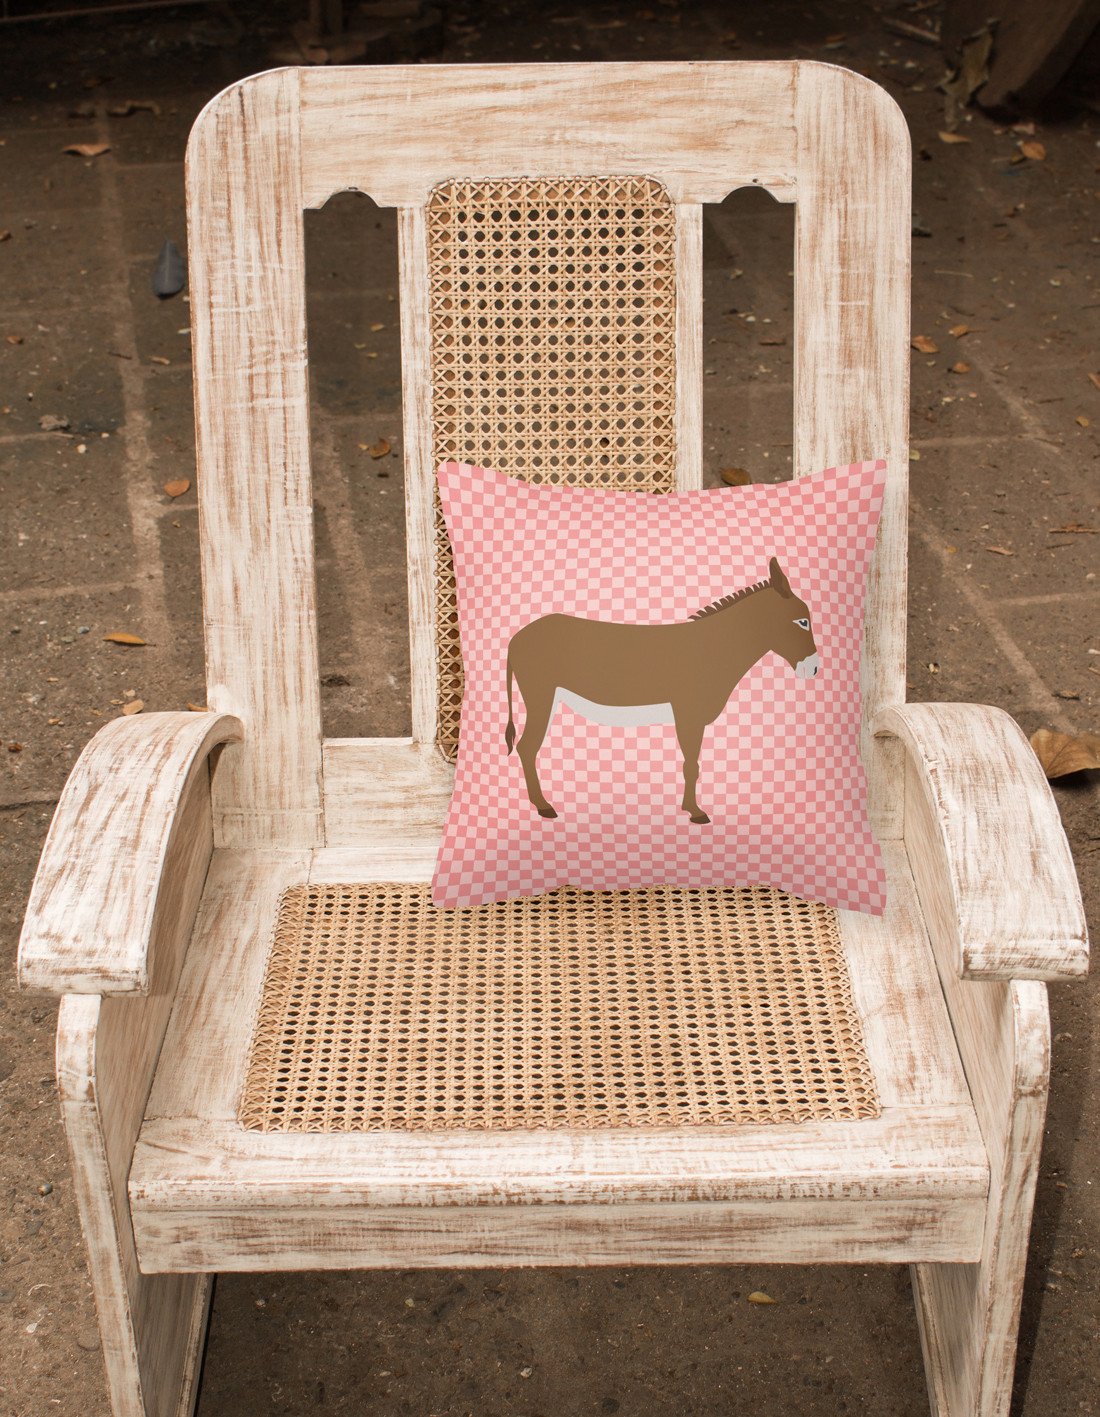 Cotentin Donkey Pink Check Fabric Decorative Pillow BB7849PW1818 by Caroline's Treasures